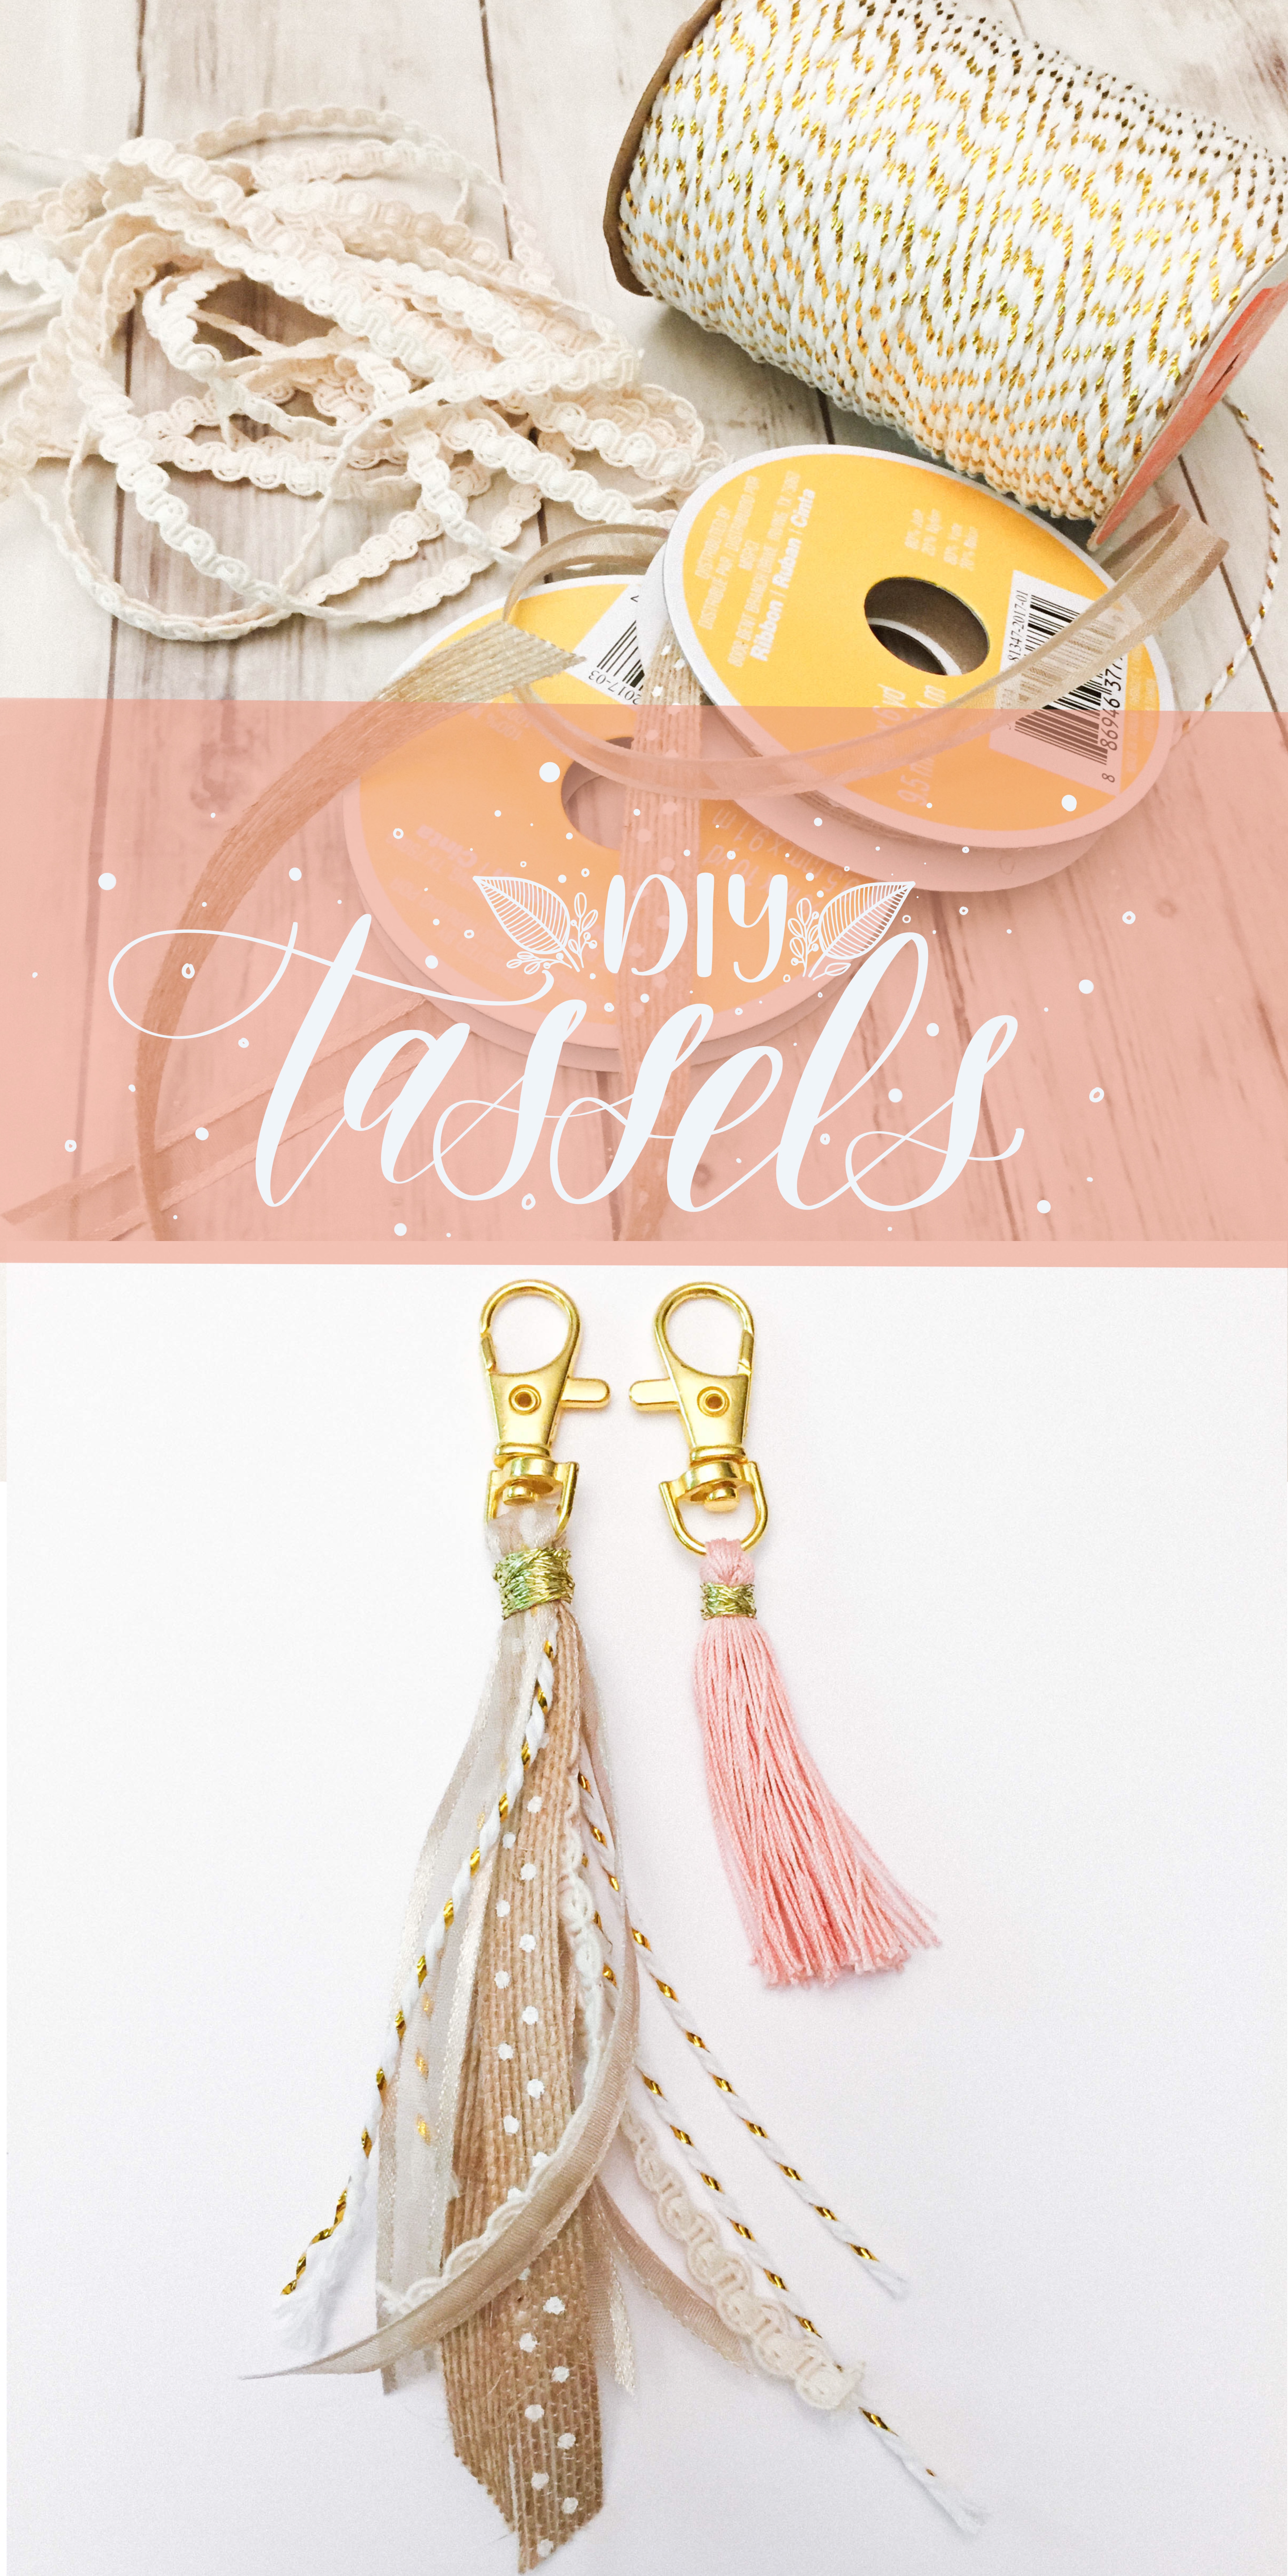 Tassel Tassels Diy Keychain Making Hanging Clasp Jewelry Craft